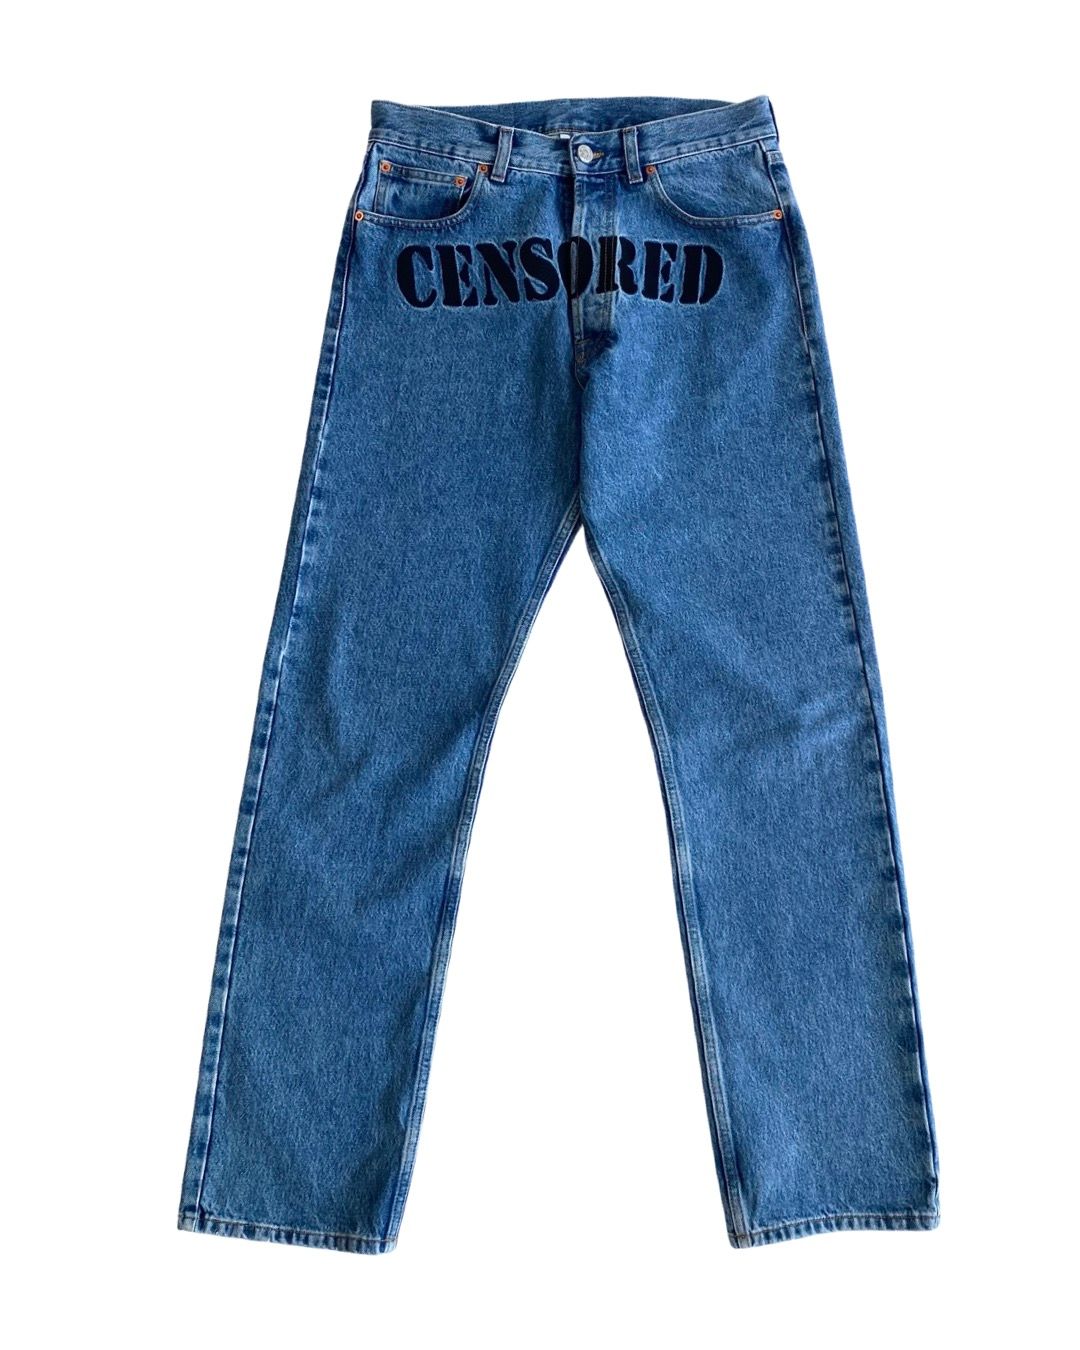 Vetements Vetements CENSORED Denim Jeans | Grailed